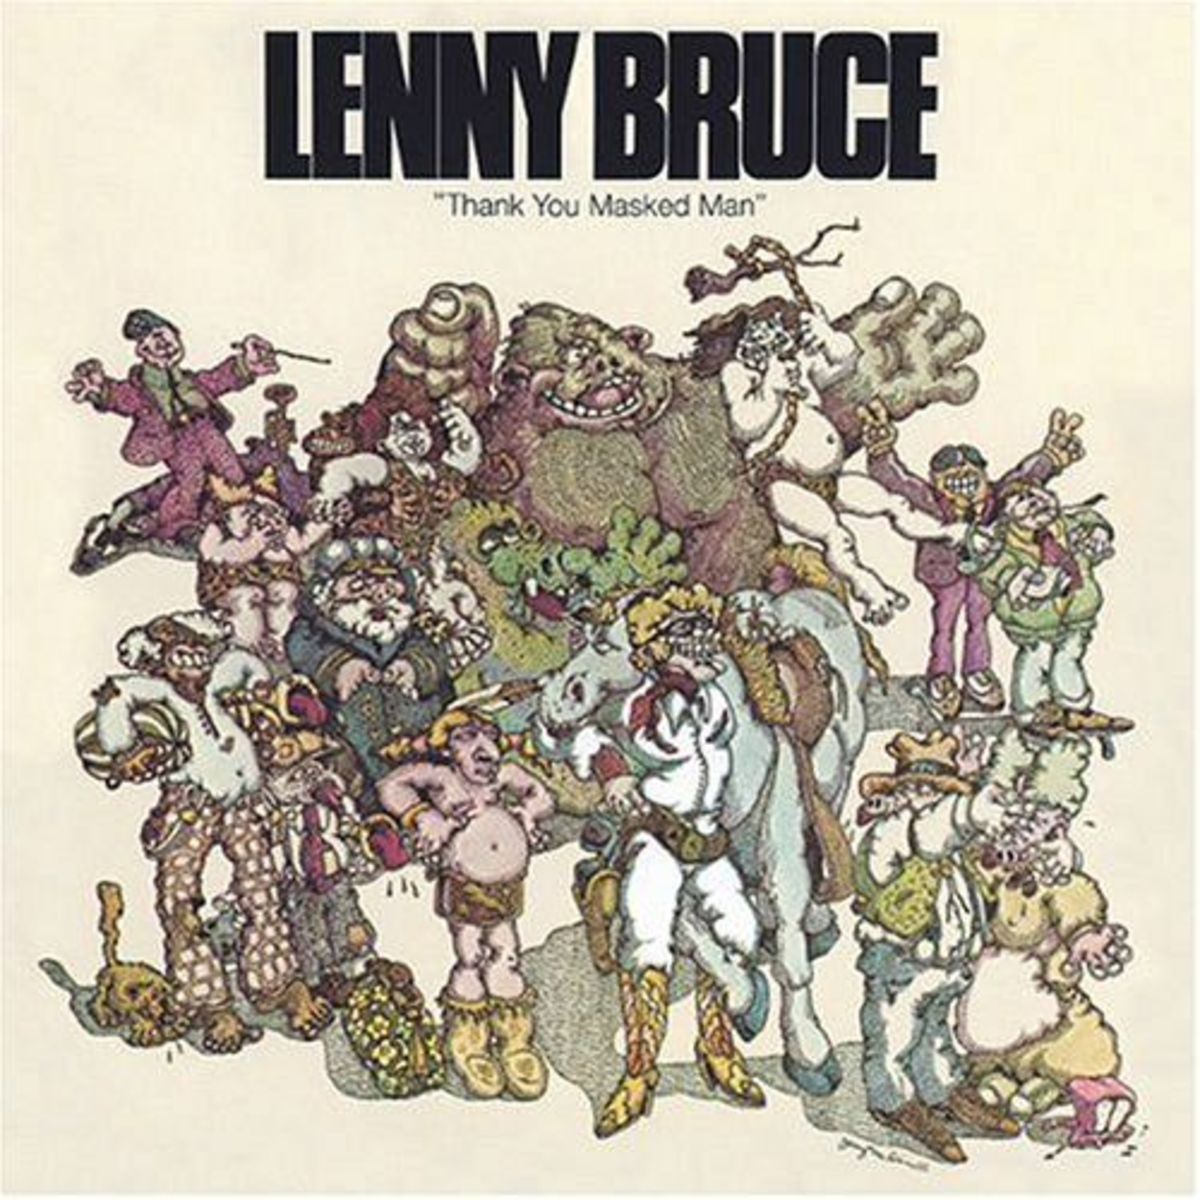 Lenny Bruce "Thank You Masked Man" Fantasy Records 7017 12" LP Vinyl Record,  US Pressing (1967) 